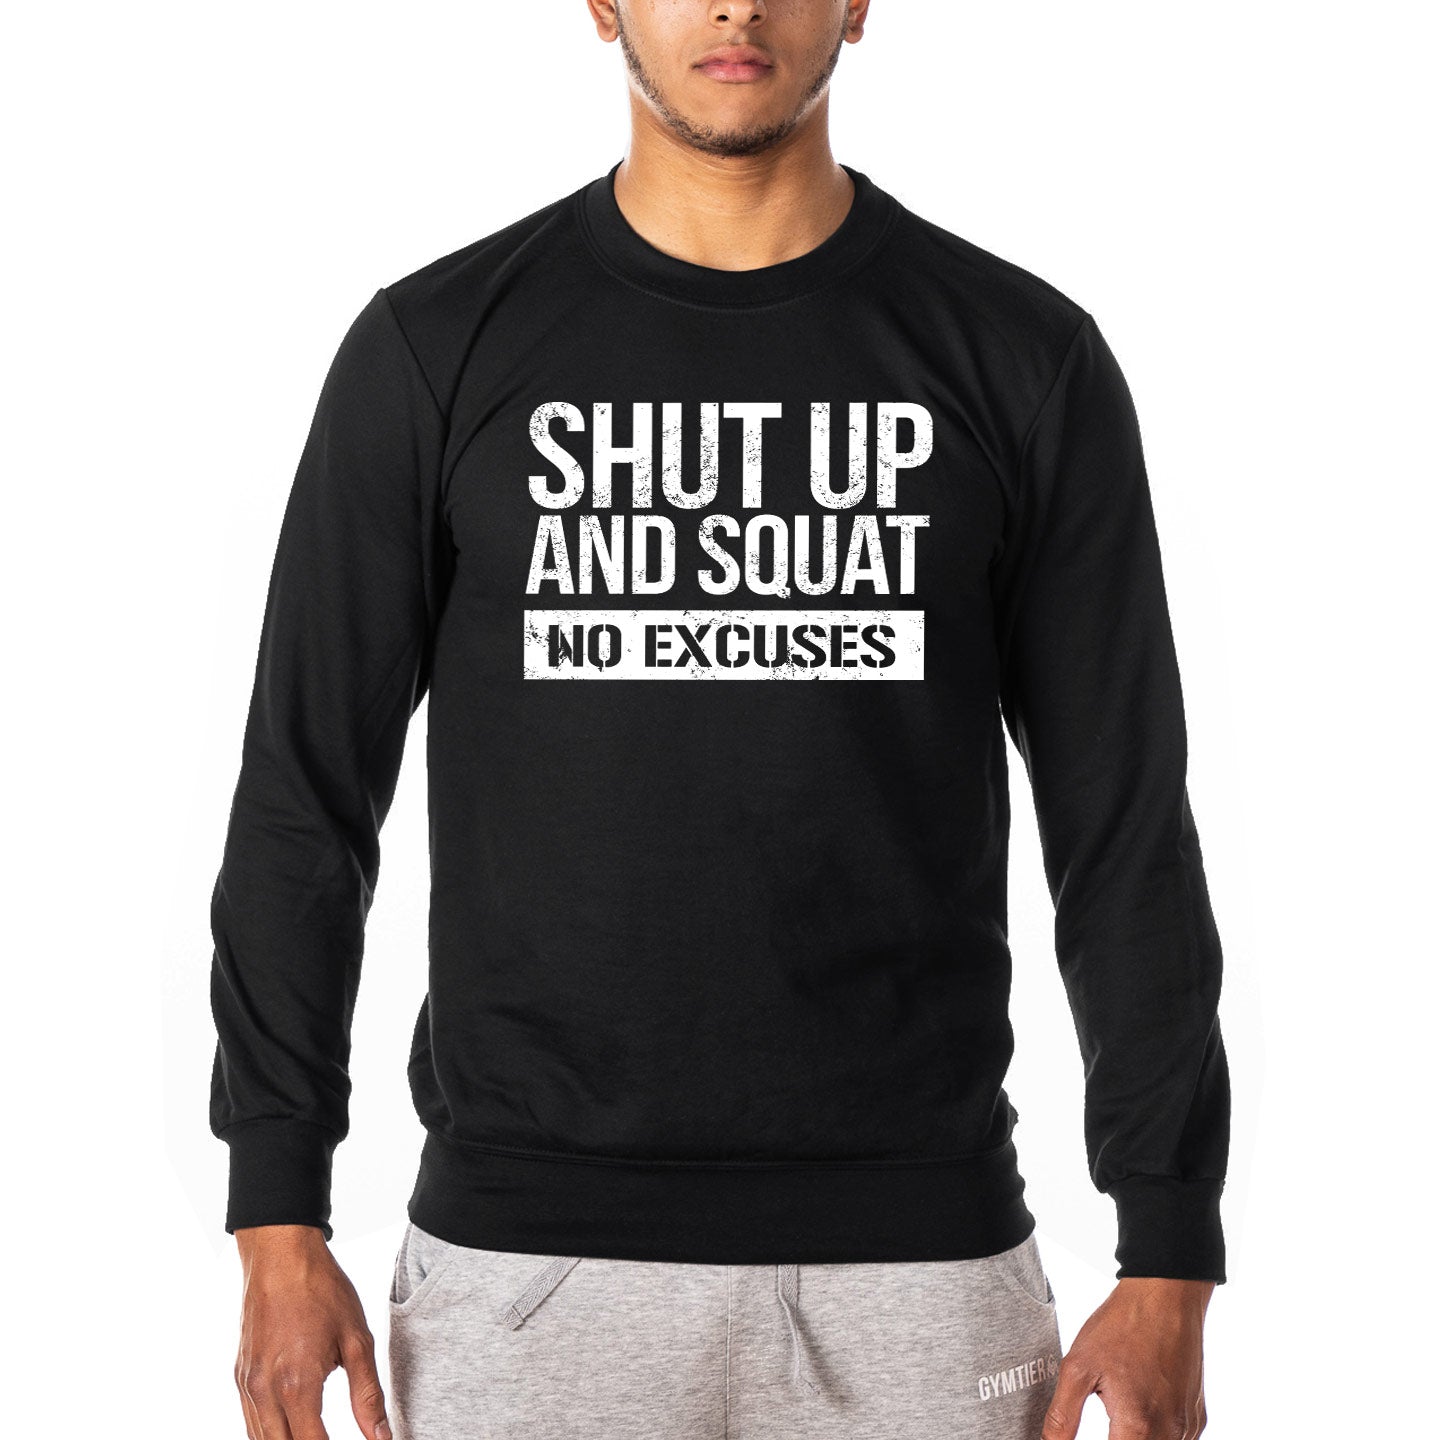 Shut Up and Squat No Excuses - Gym Sweatshirt